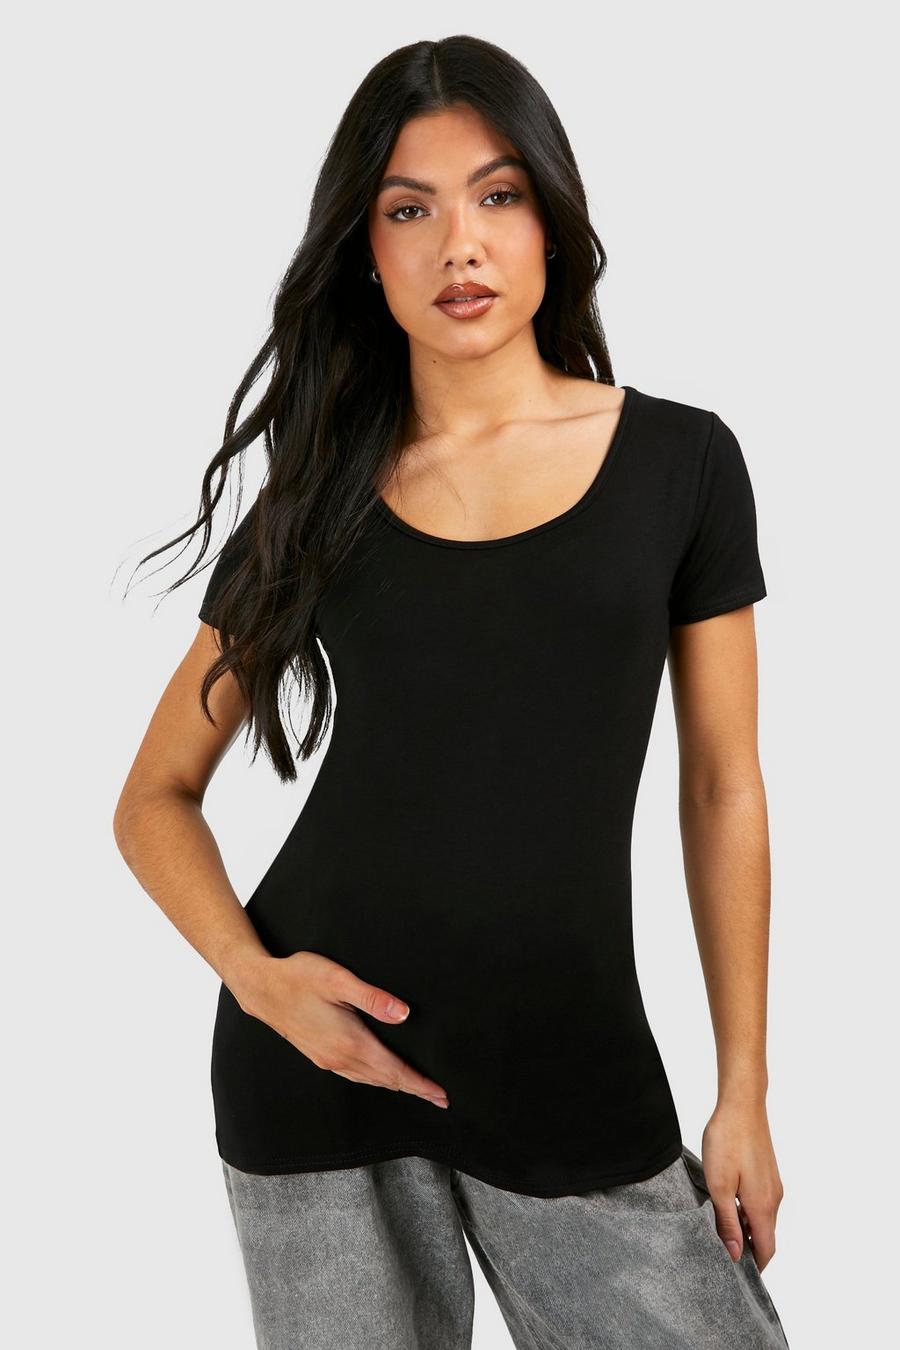 Black tee shirt marin femme taille